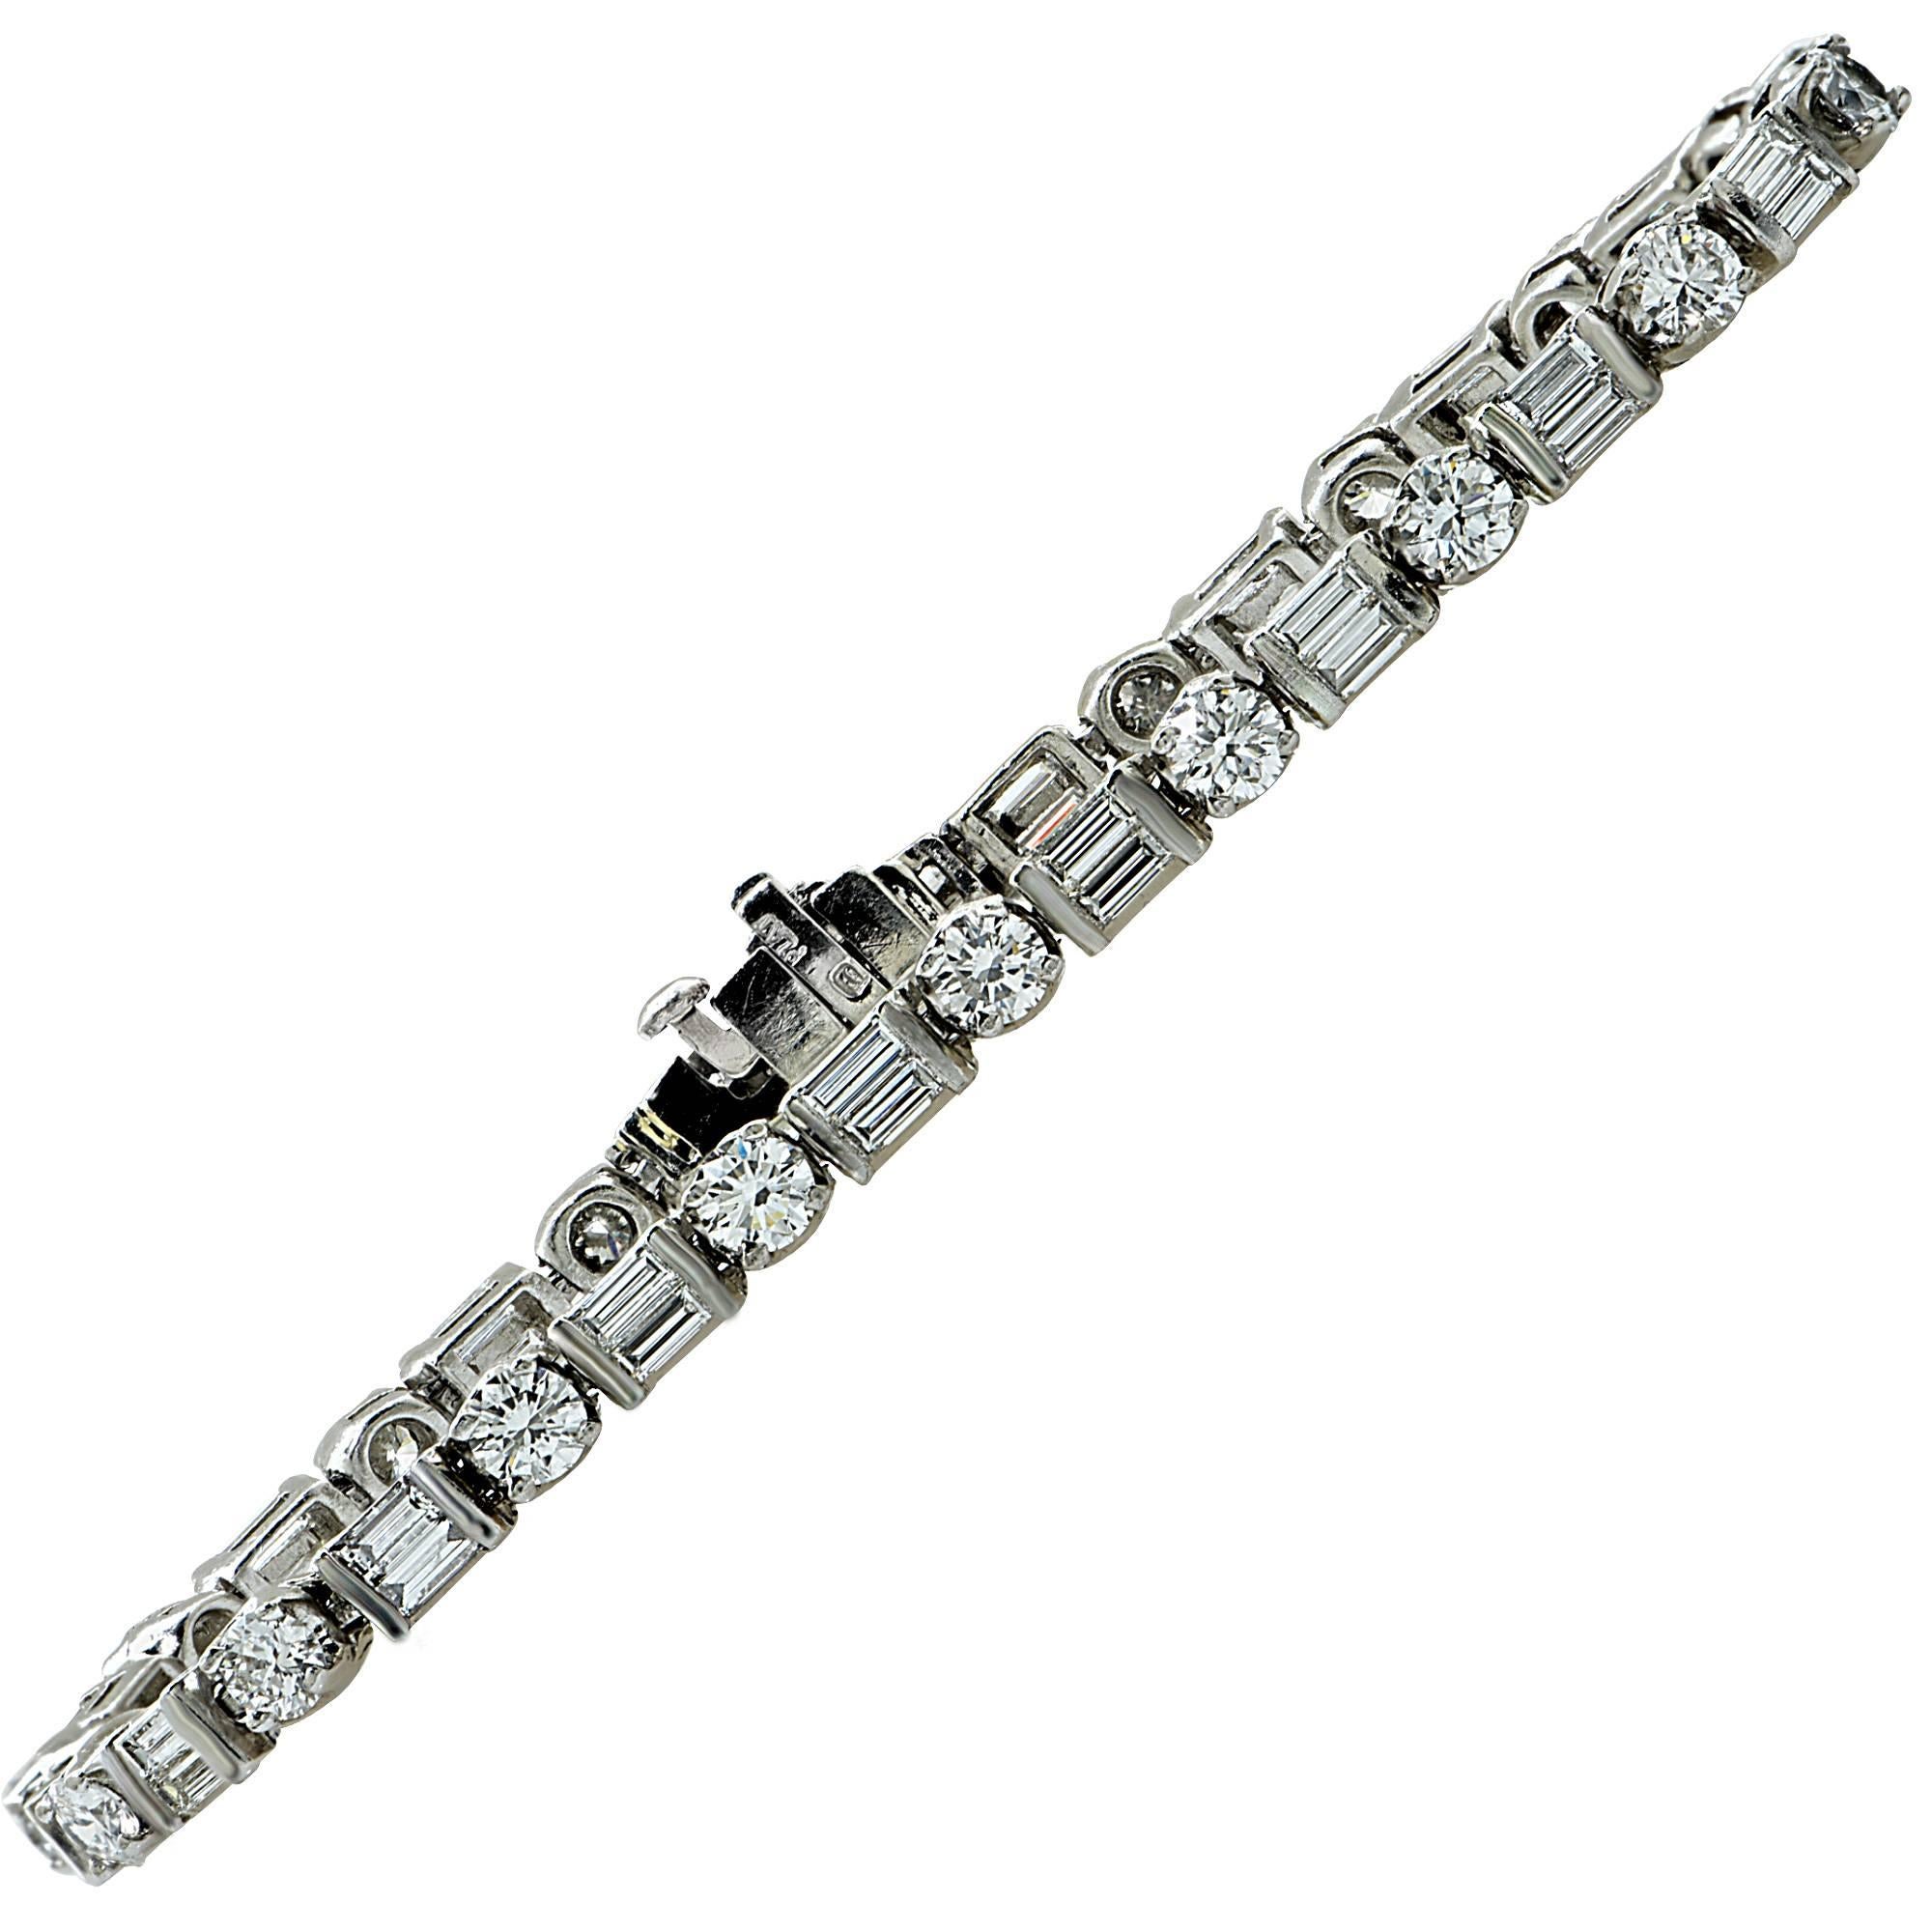 4.75 Carat Diamond Bracelet